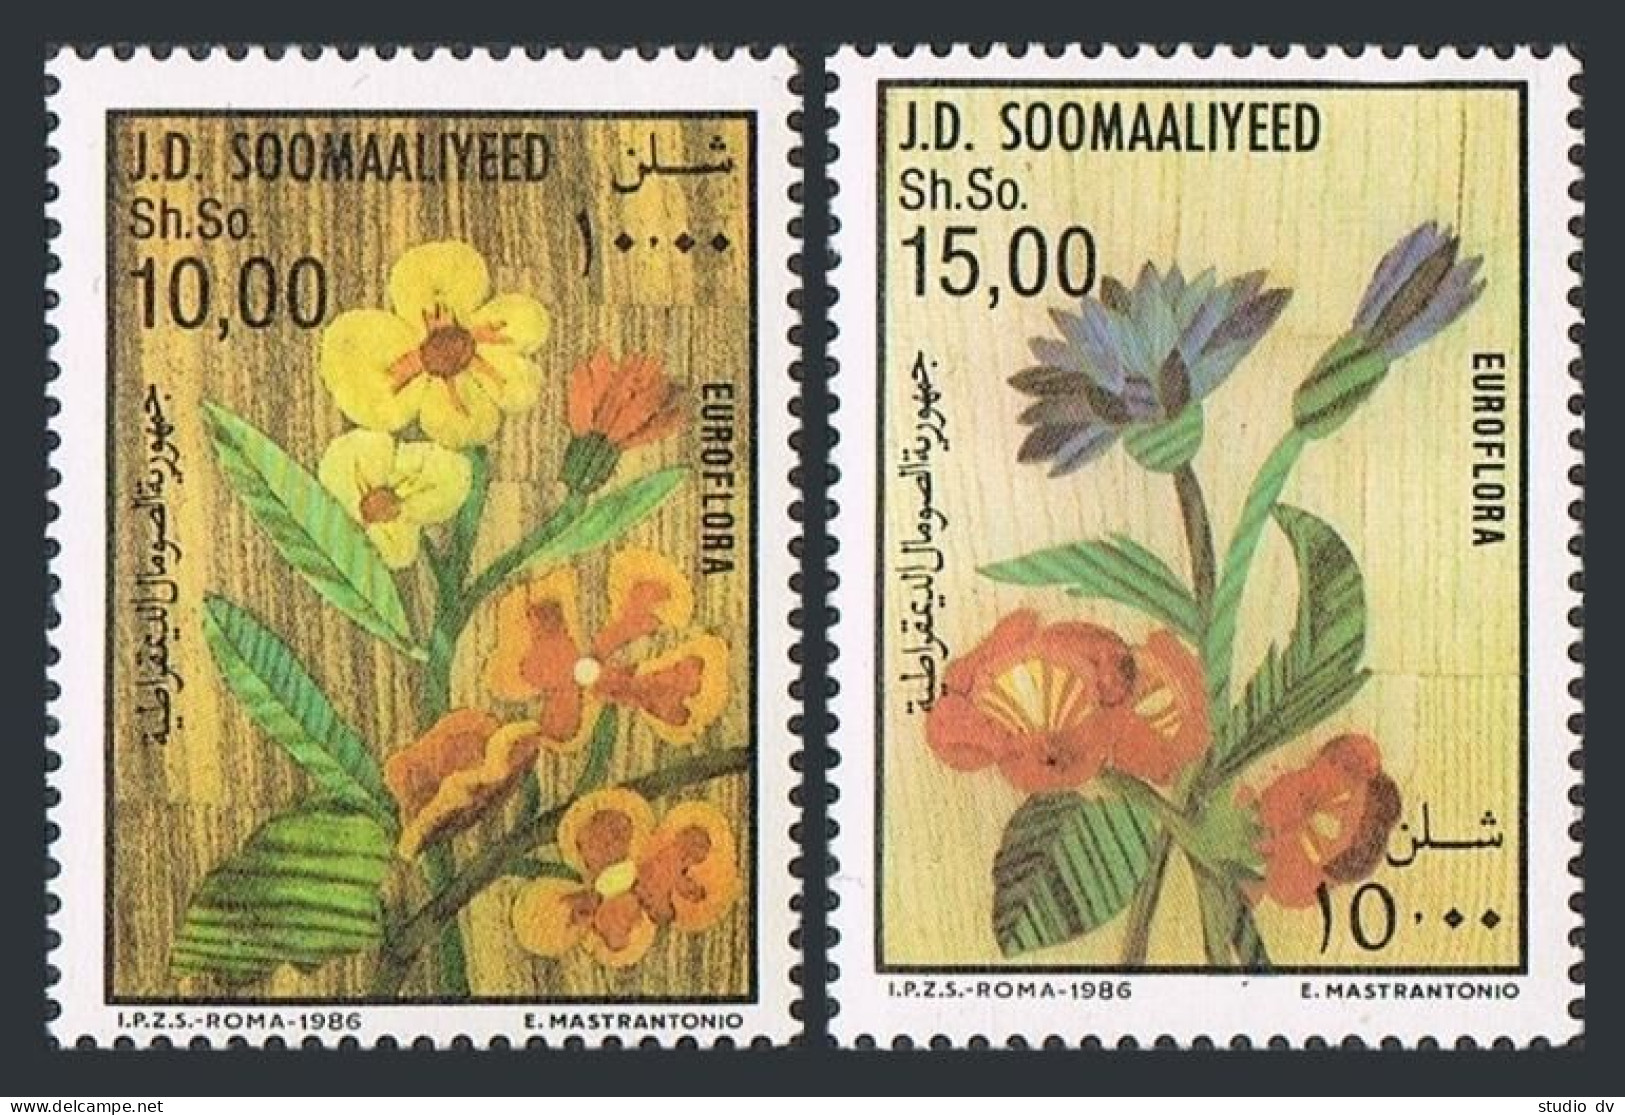 Somalia 564-565,565a,MNH.Mi 384-385,Bl.20.EUROFLORA-1986 Flower Exhibition,Genoa - Mali (1959-...)